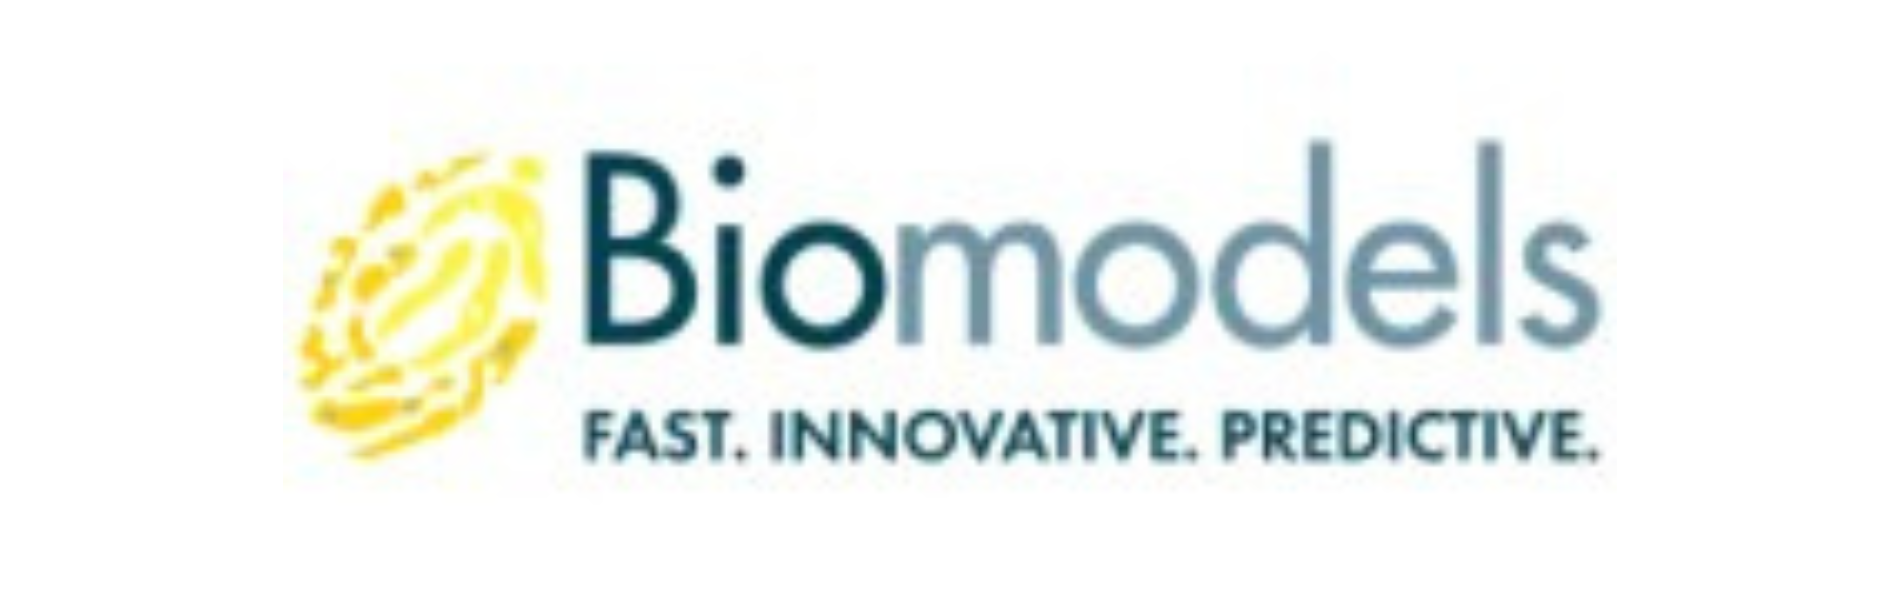 Biomodels